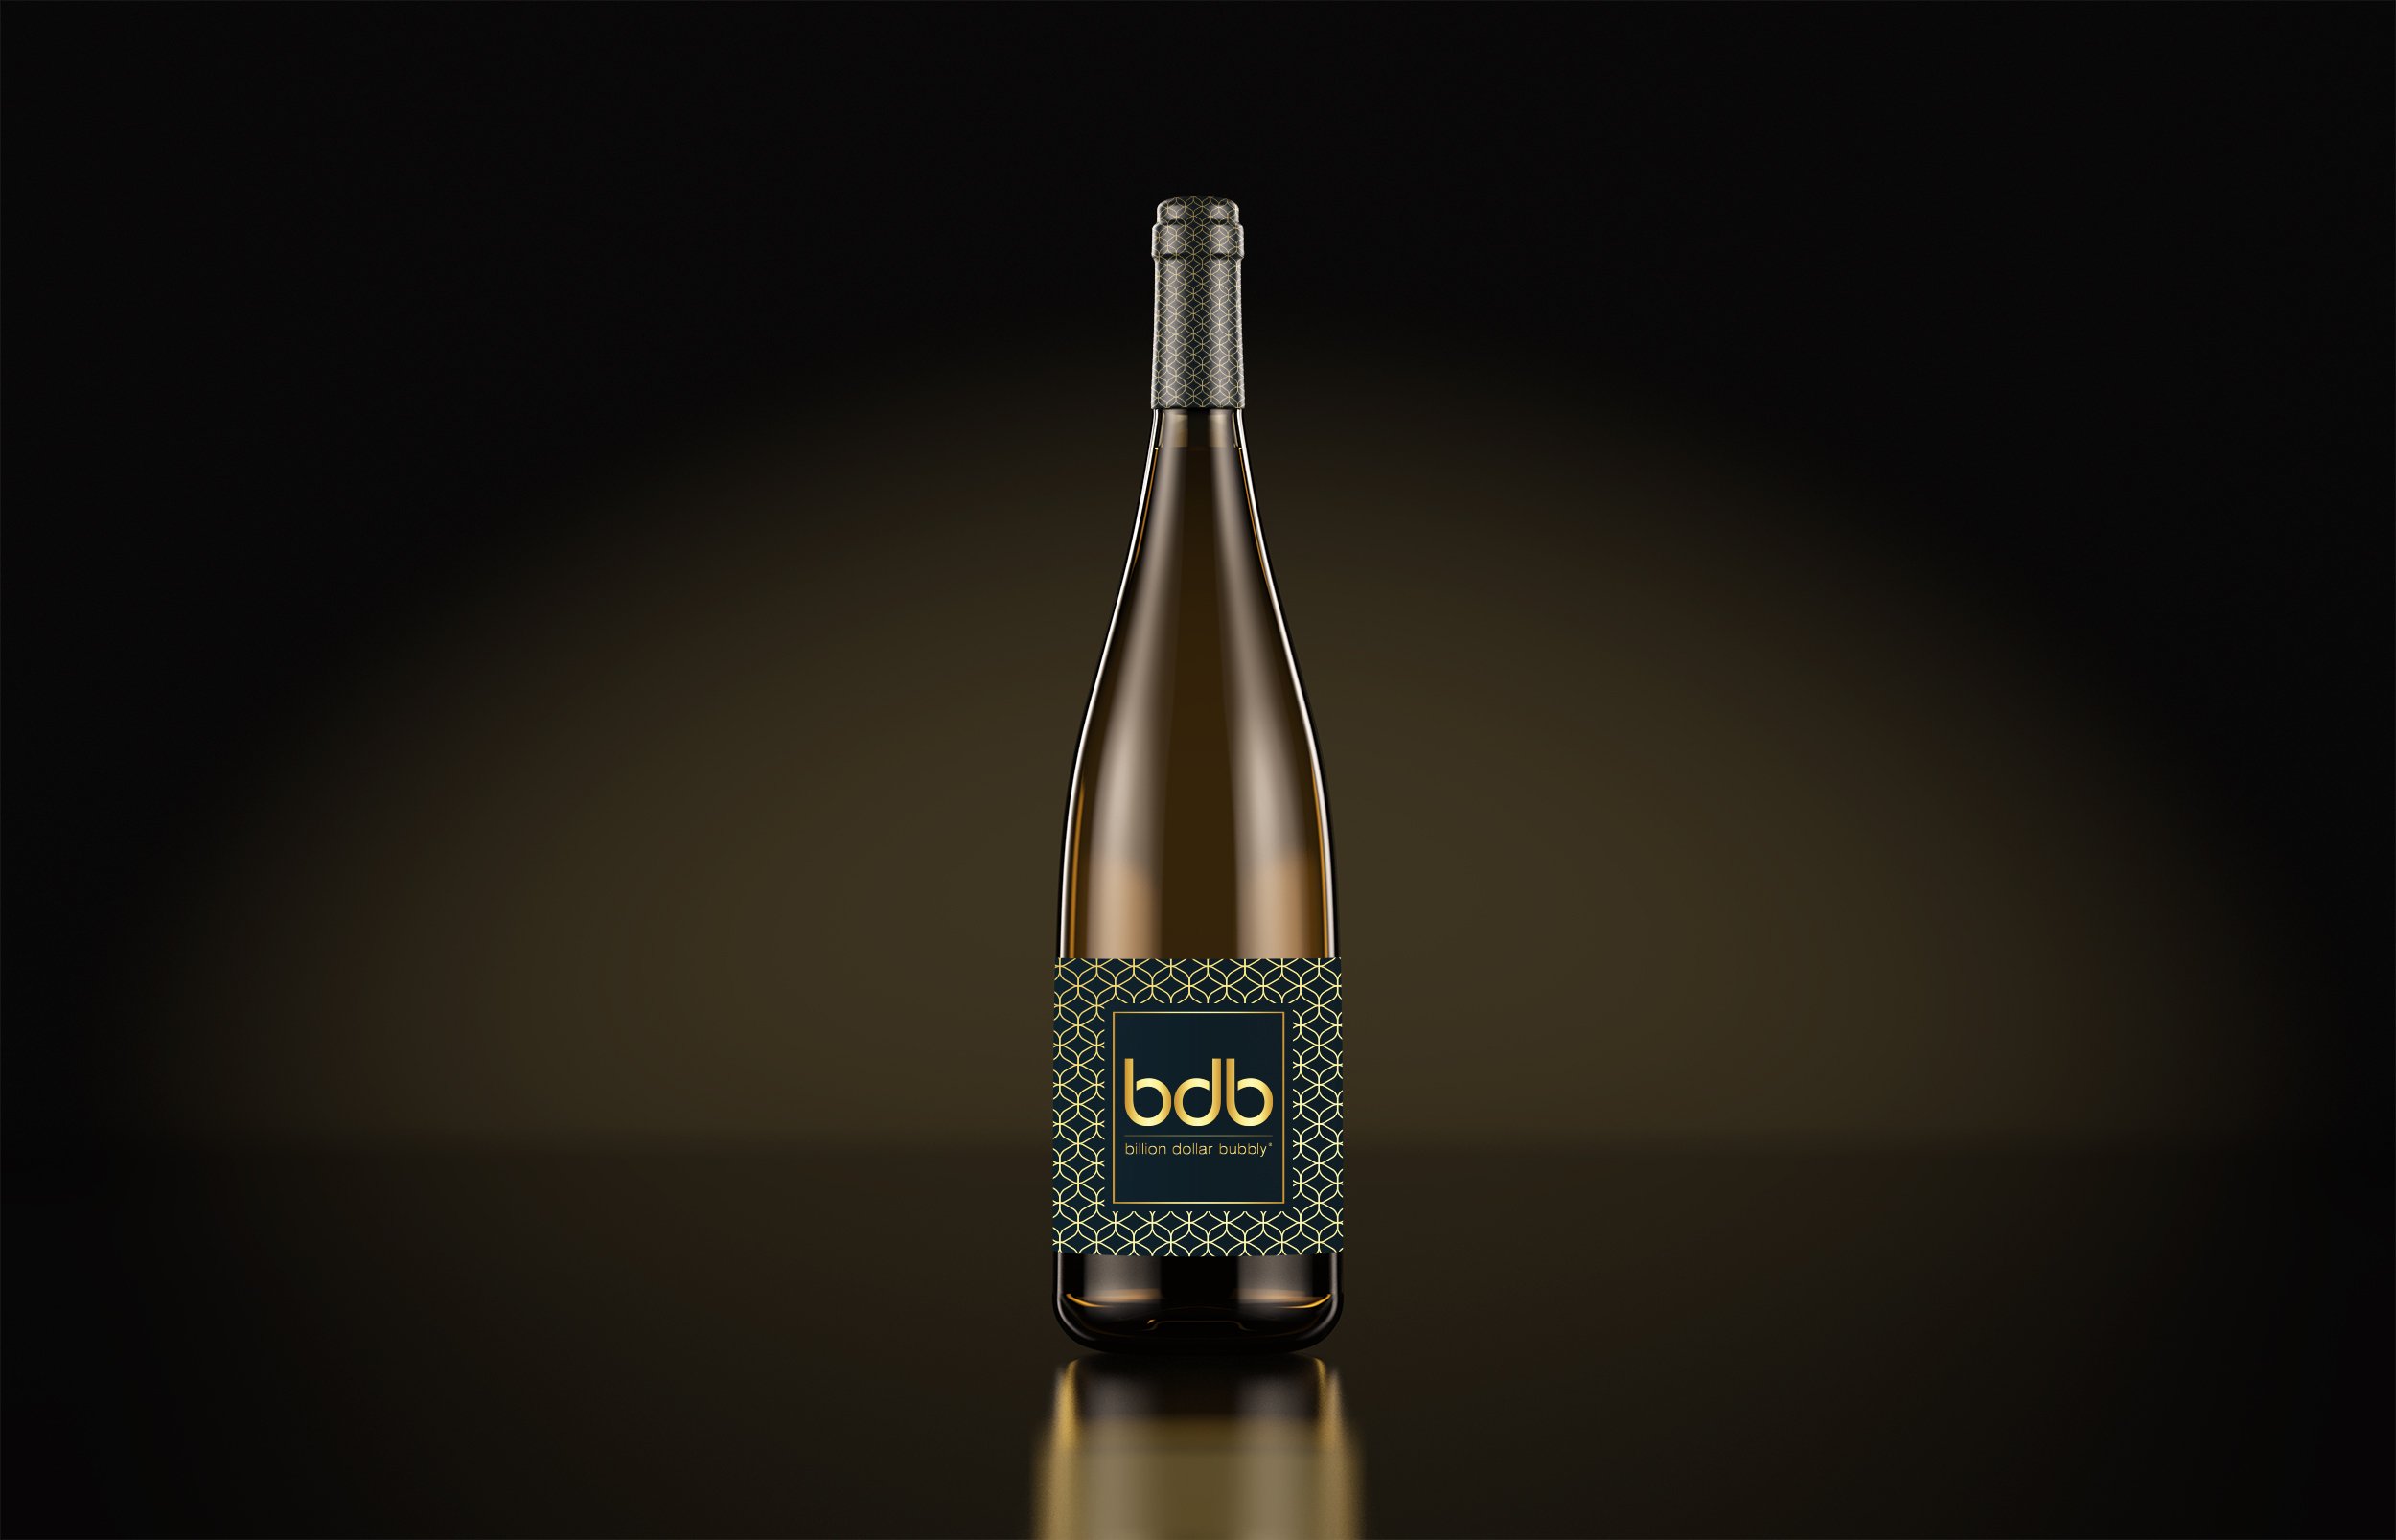 BDB Billion Dollar Bubbly Champagne Label